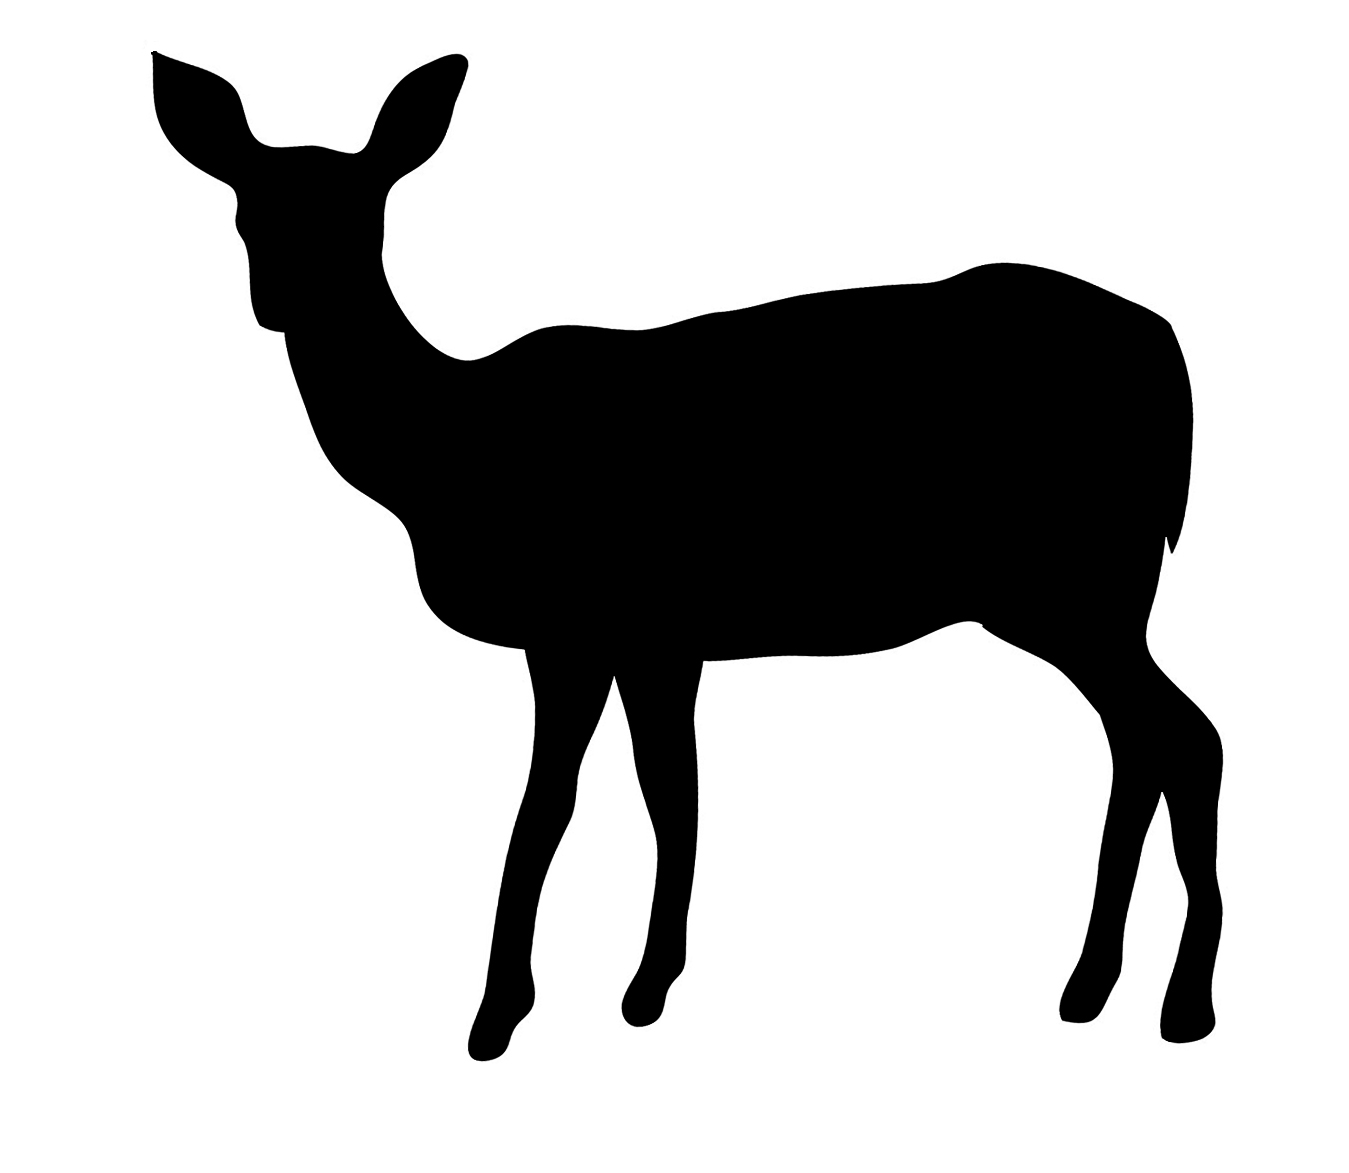 Animal silhouette clip art